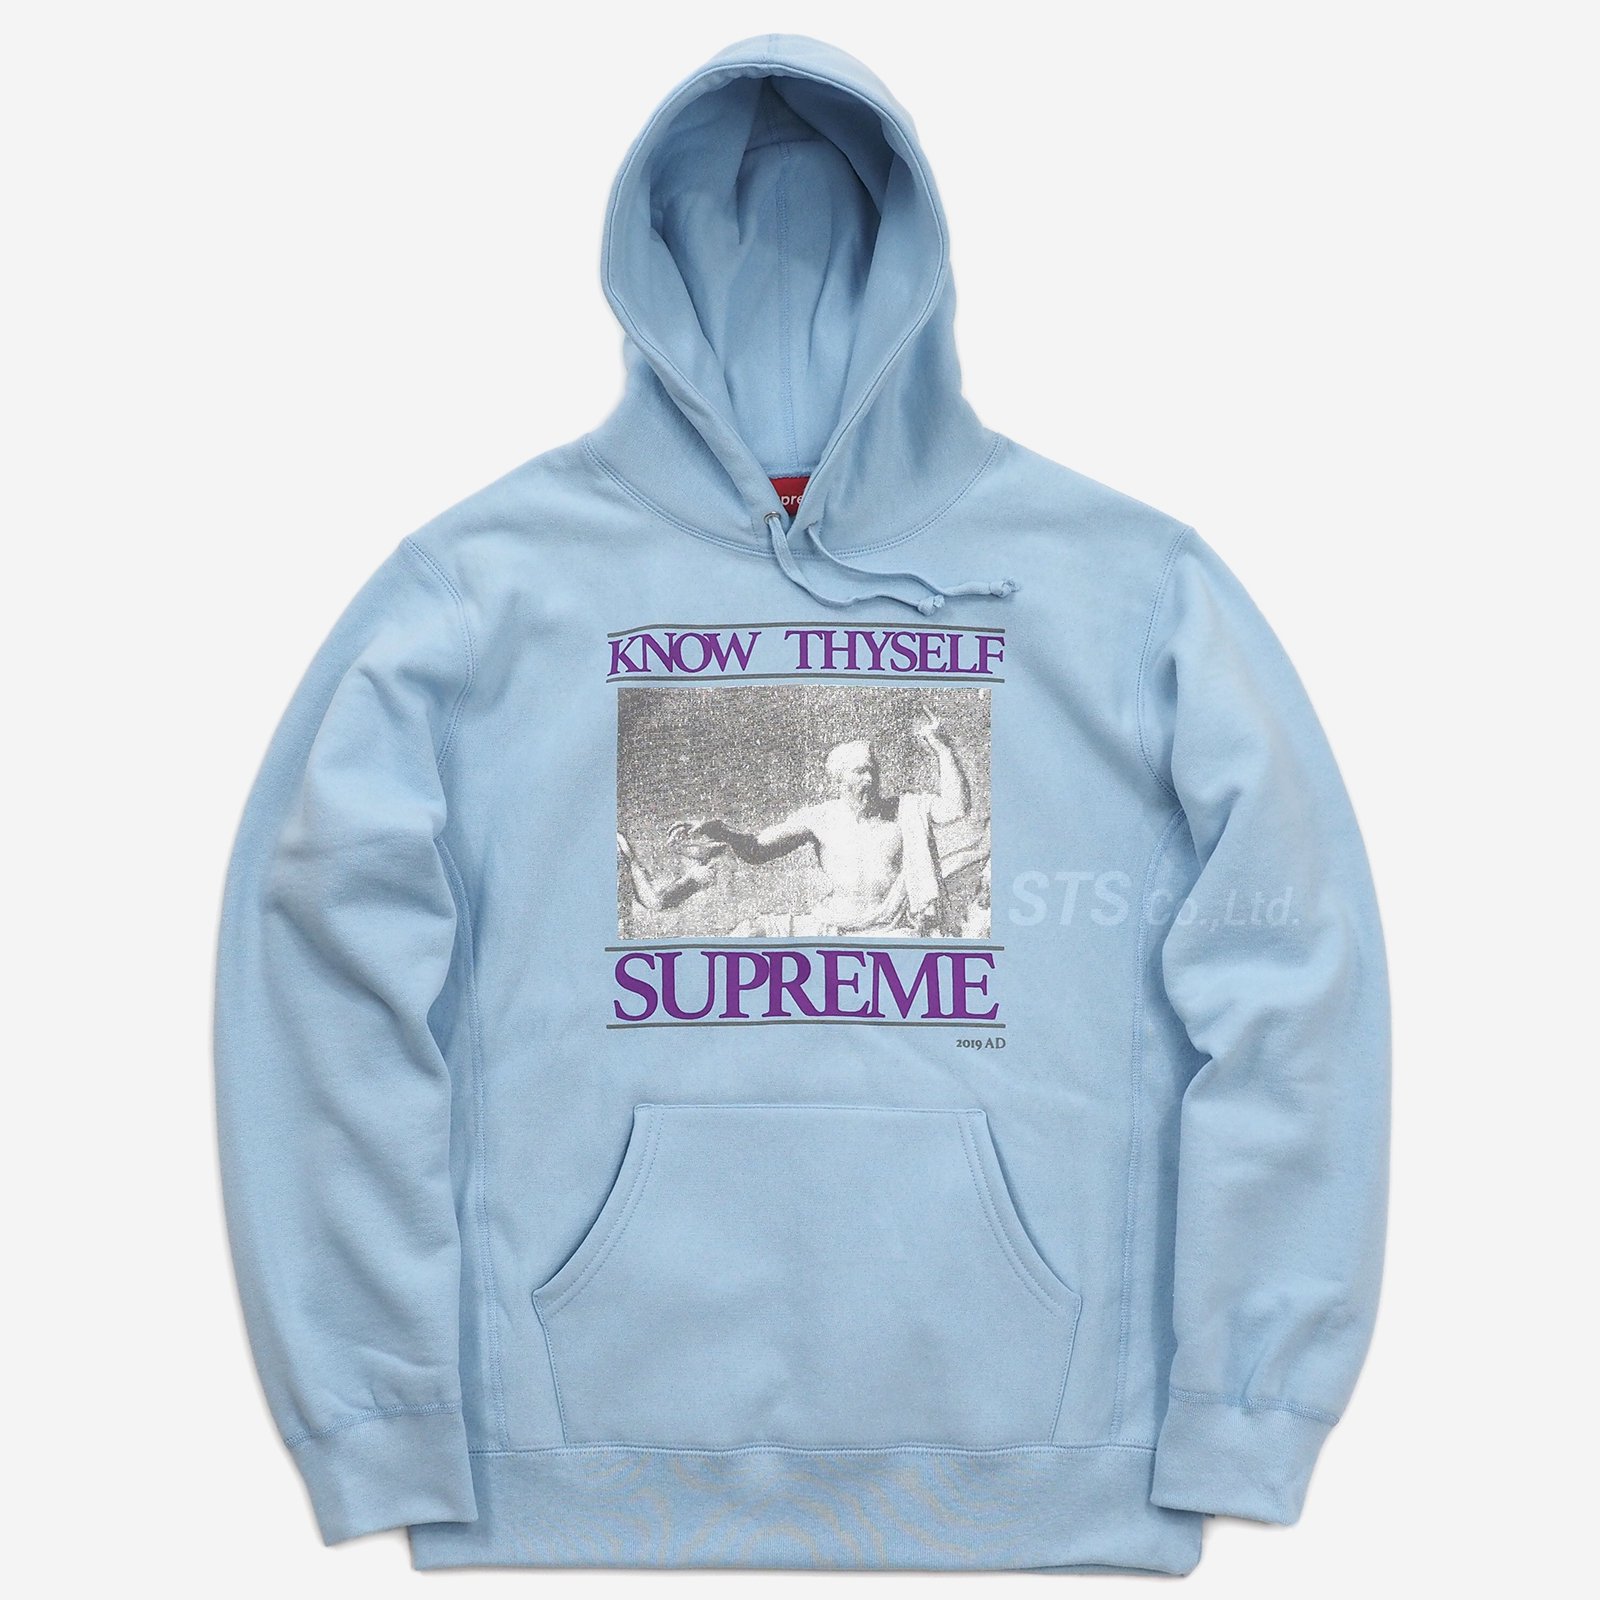 Supreme - Know Thyself Hooded Sweatshirt - ParkSIDER